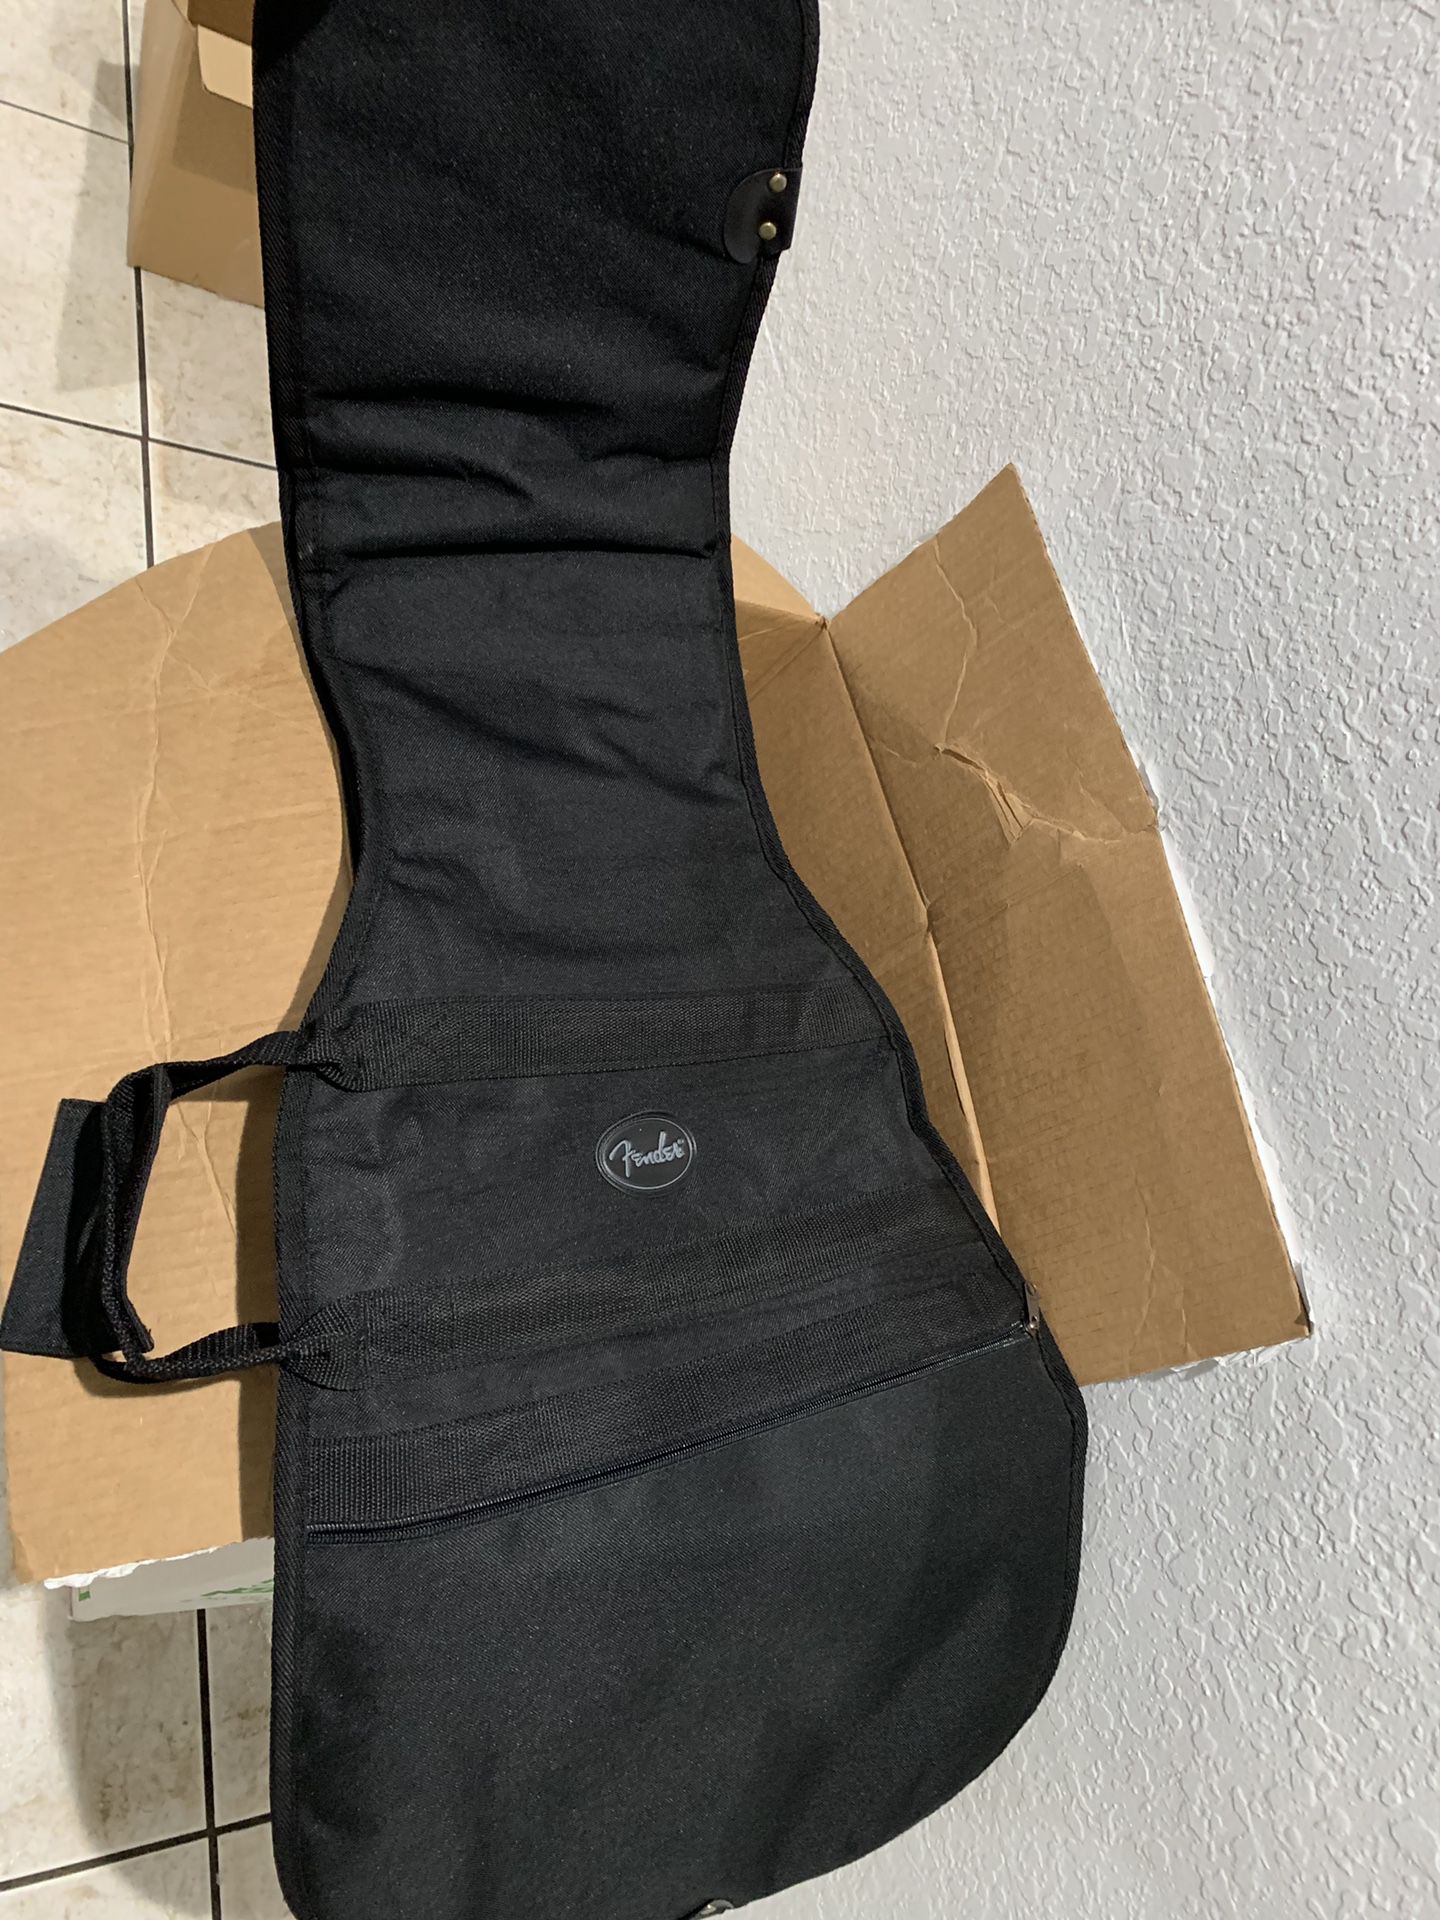 Electric guitar fender bag